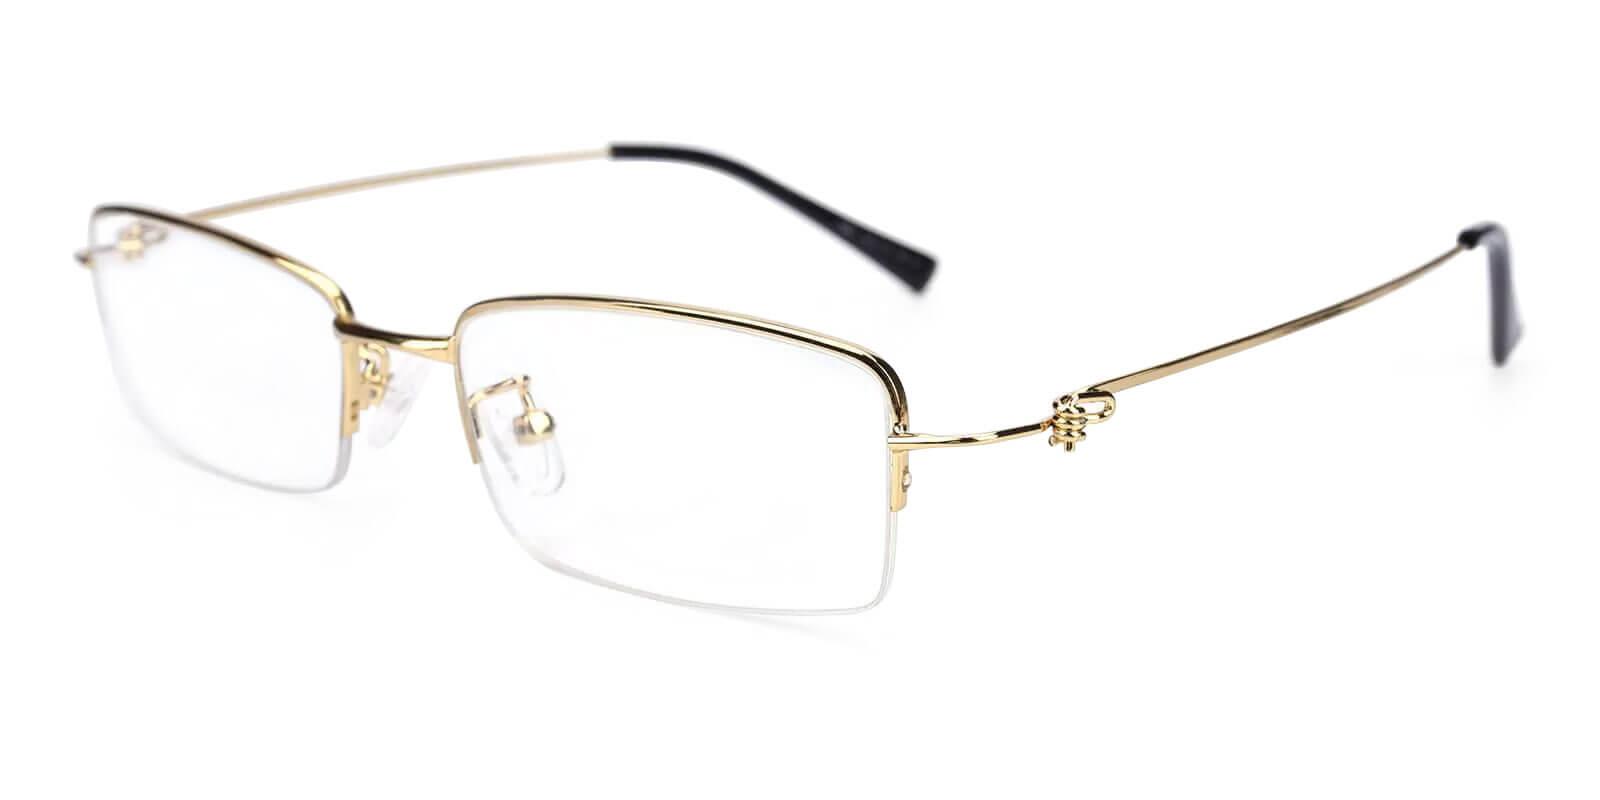 Chris Gold Metal Eyeglasses , NosePads Frames from ABBE Glasses